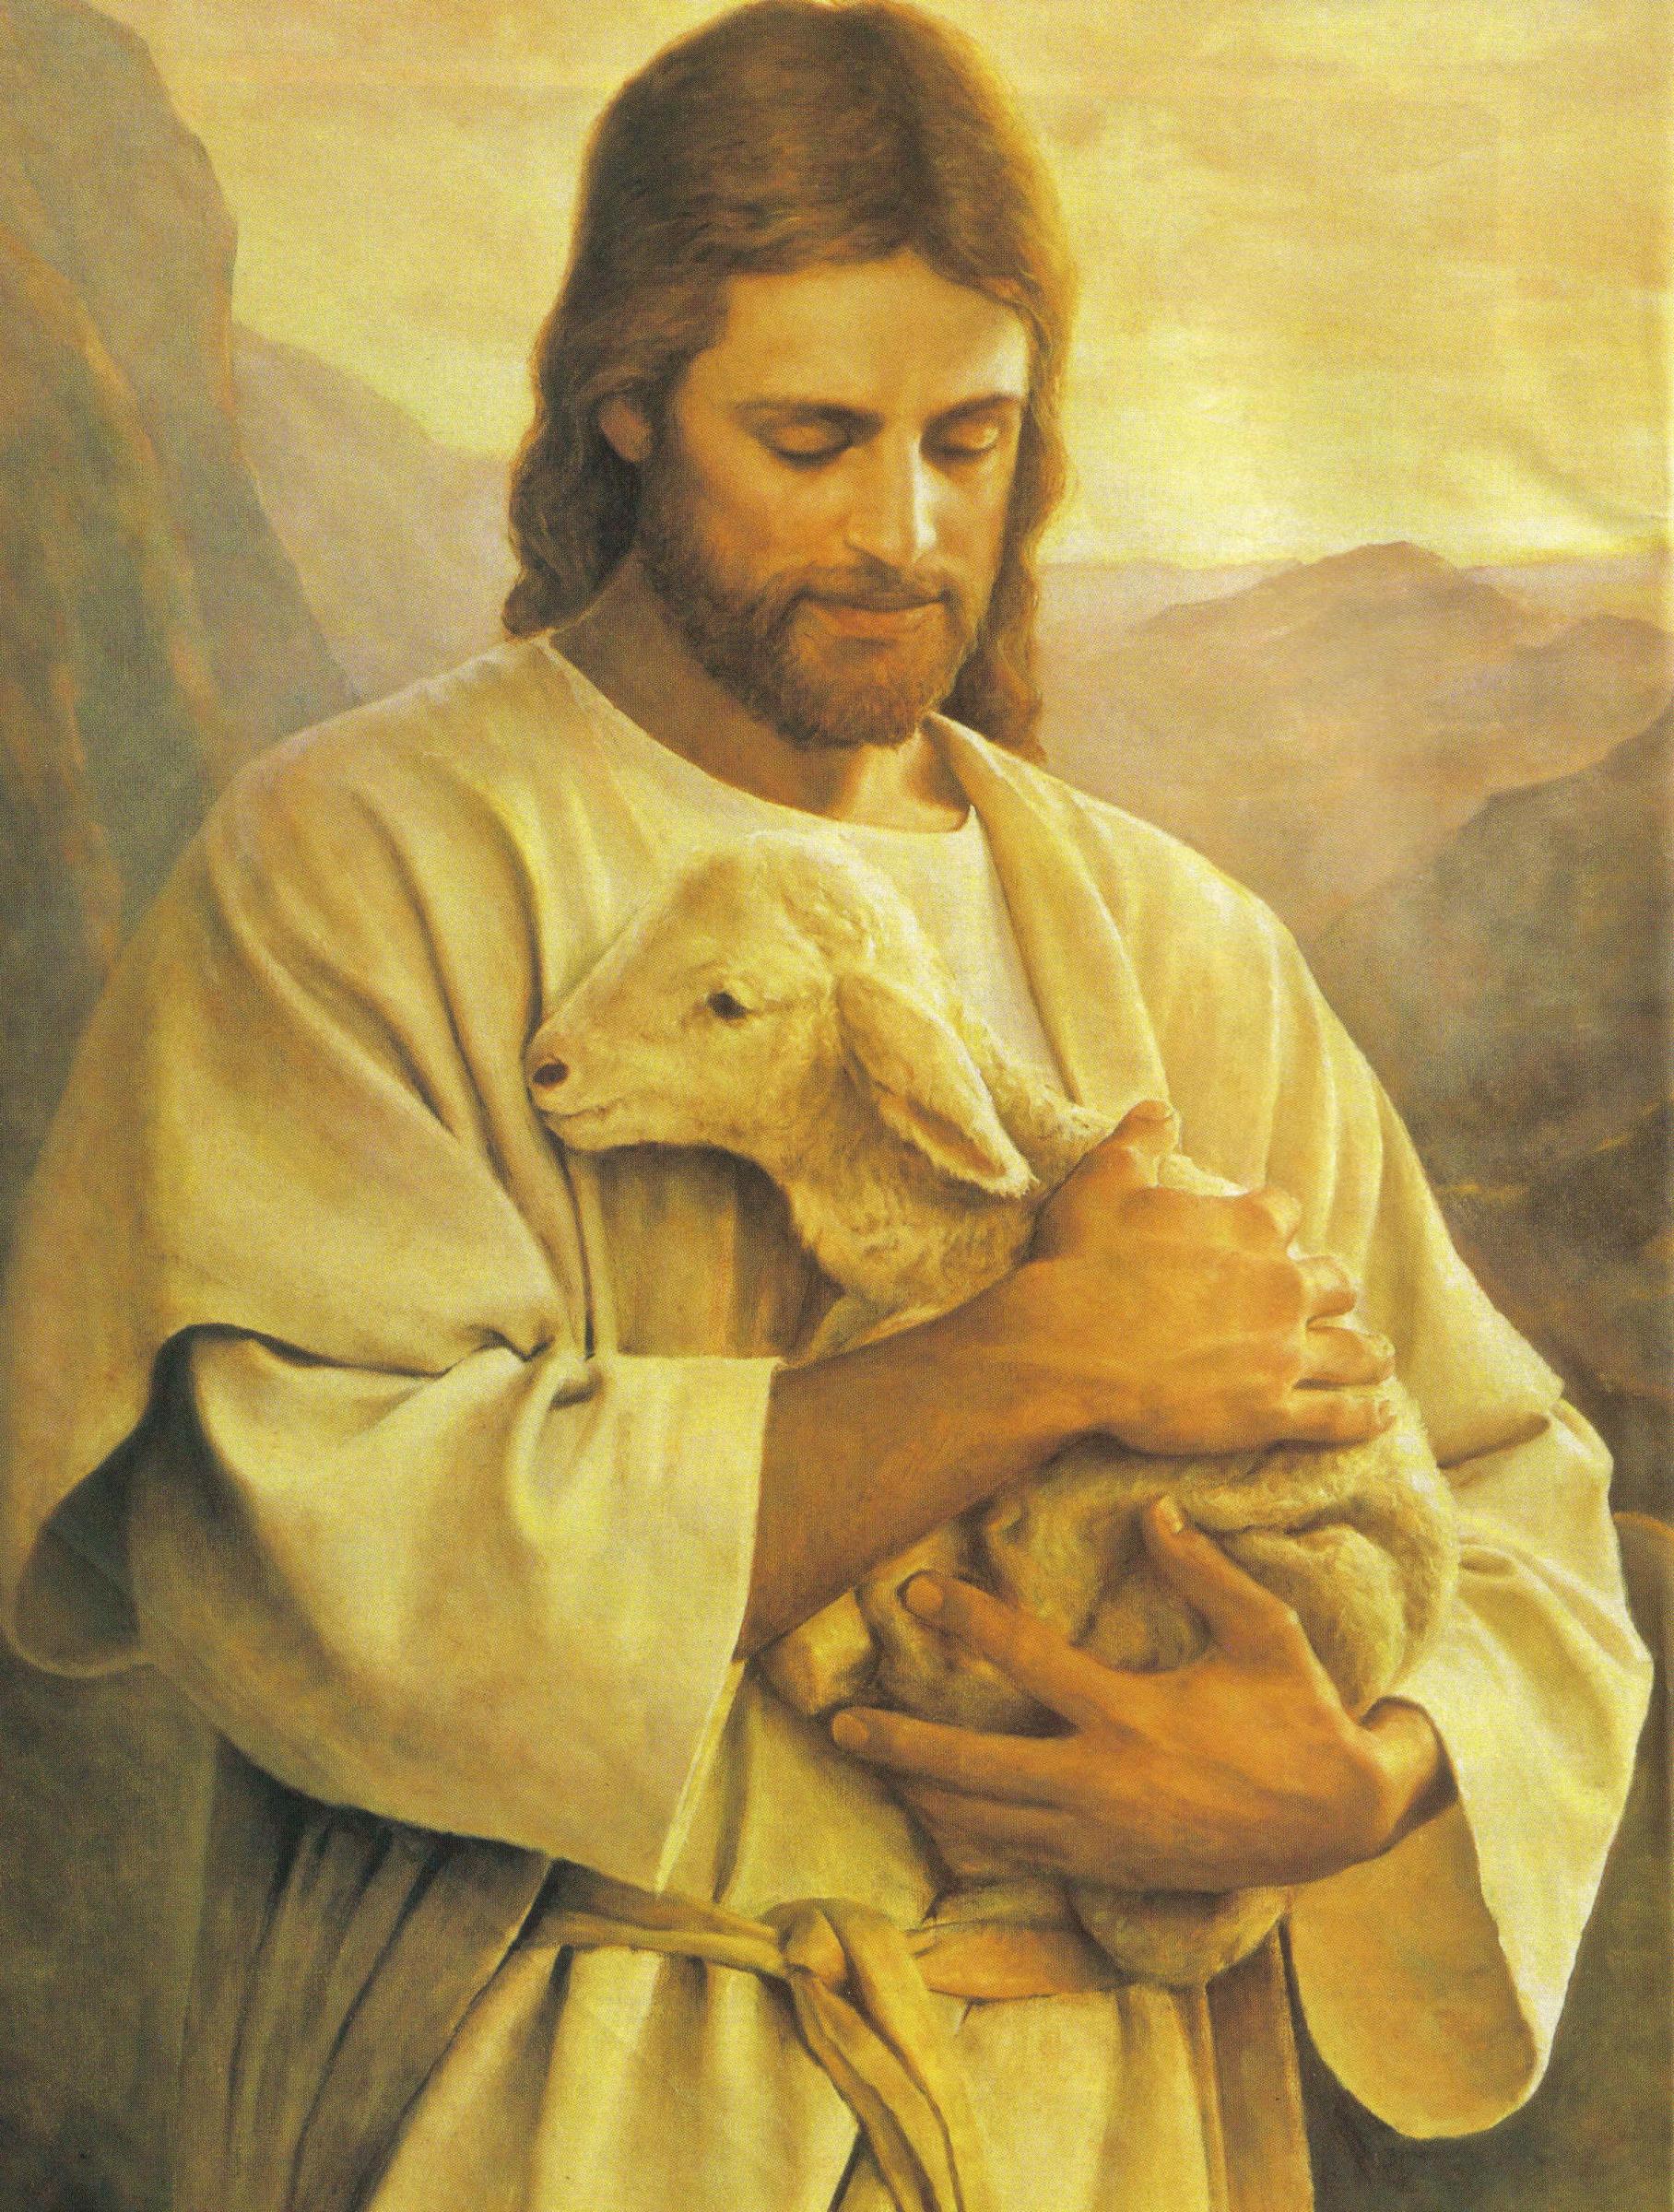 Jesus, The Good Shepherd